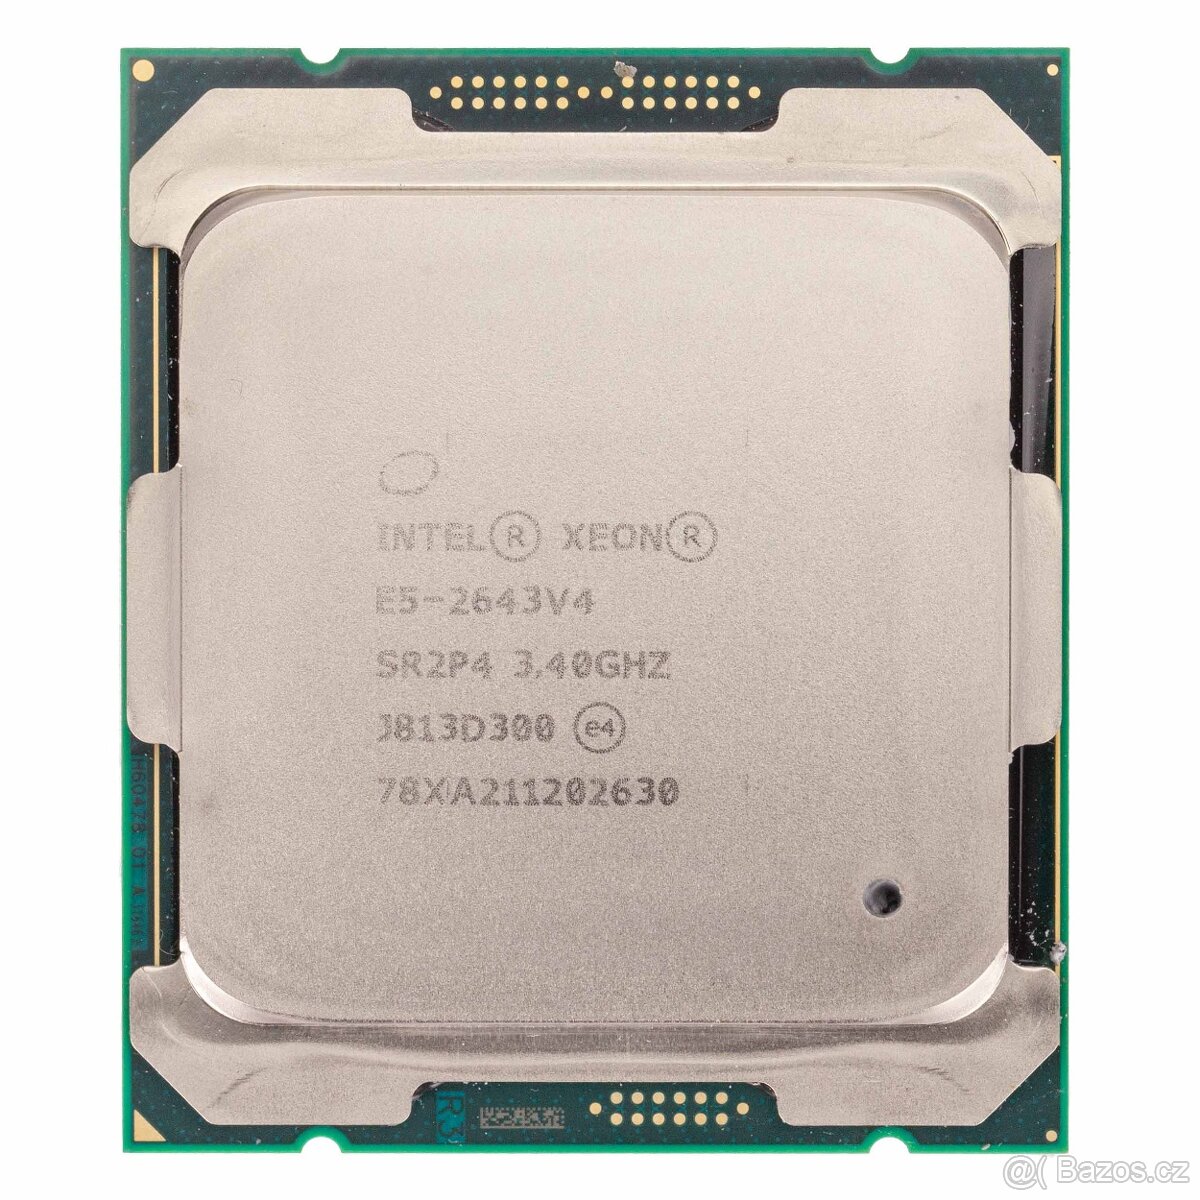 Intel Xeon E5-2643 V4